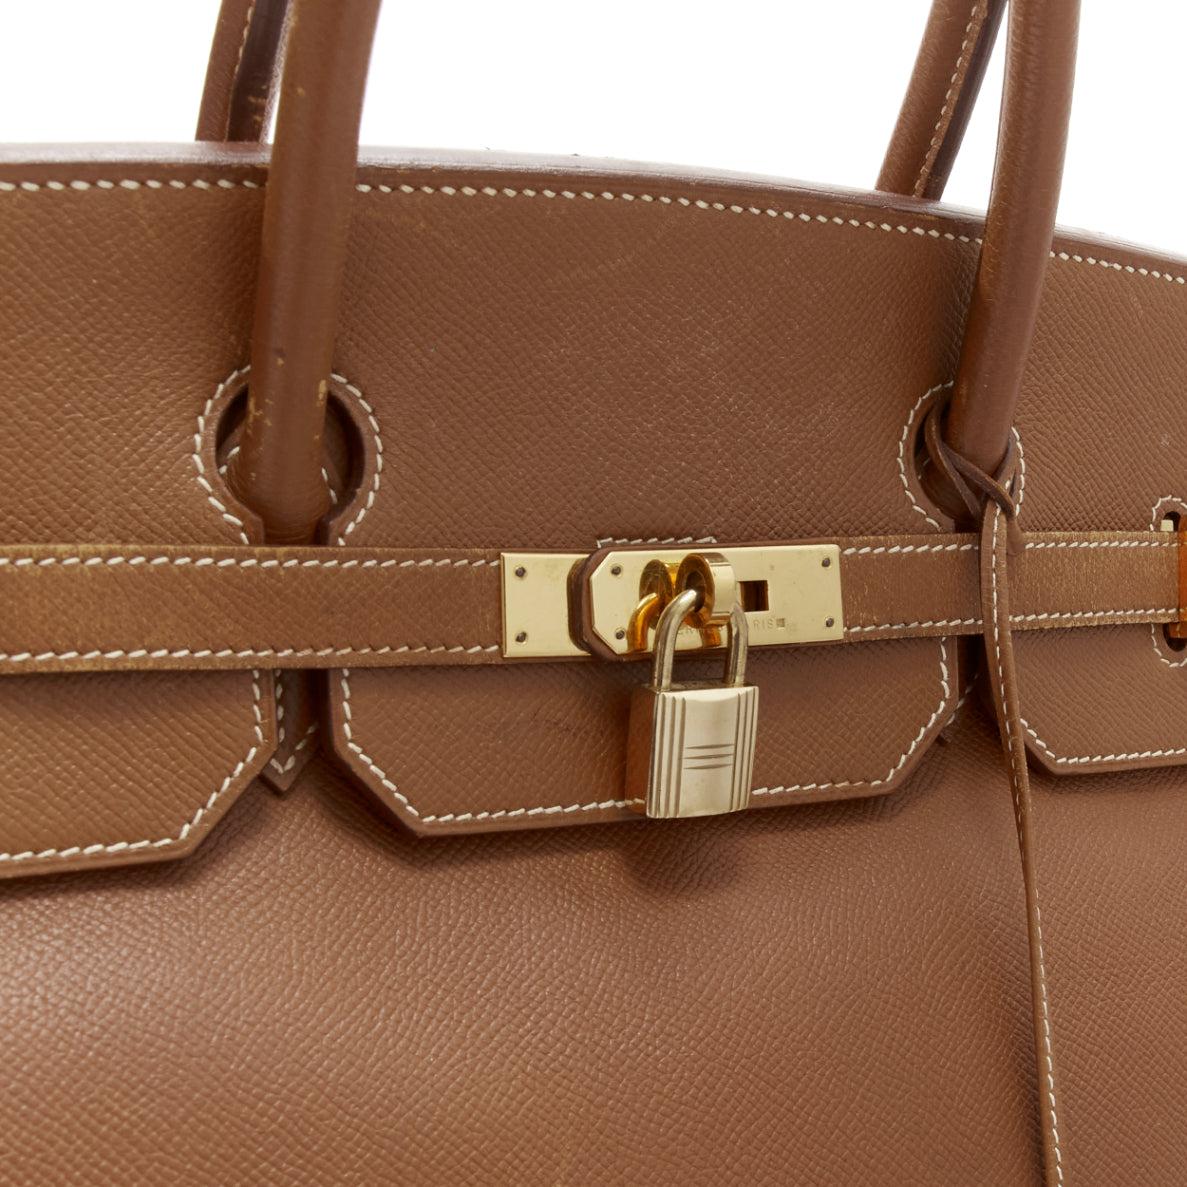 HERMES Birkin 40 Epsom brown leather gold hardware leather tote bag For Sale 2